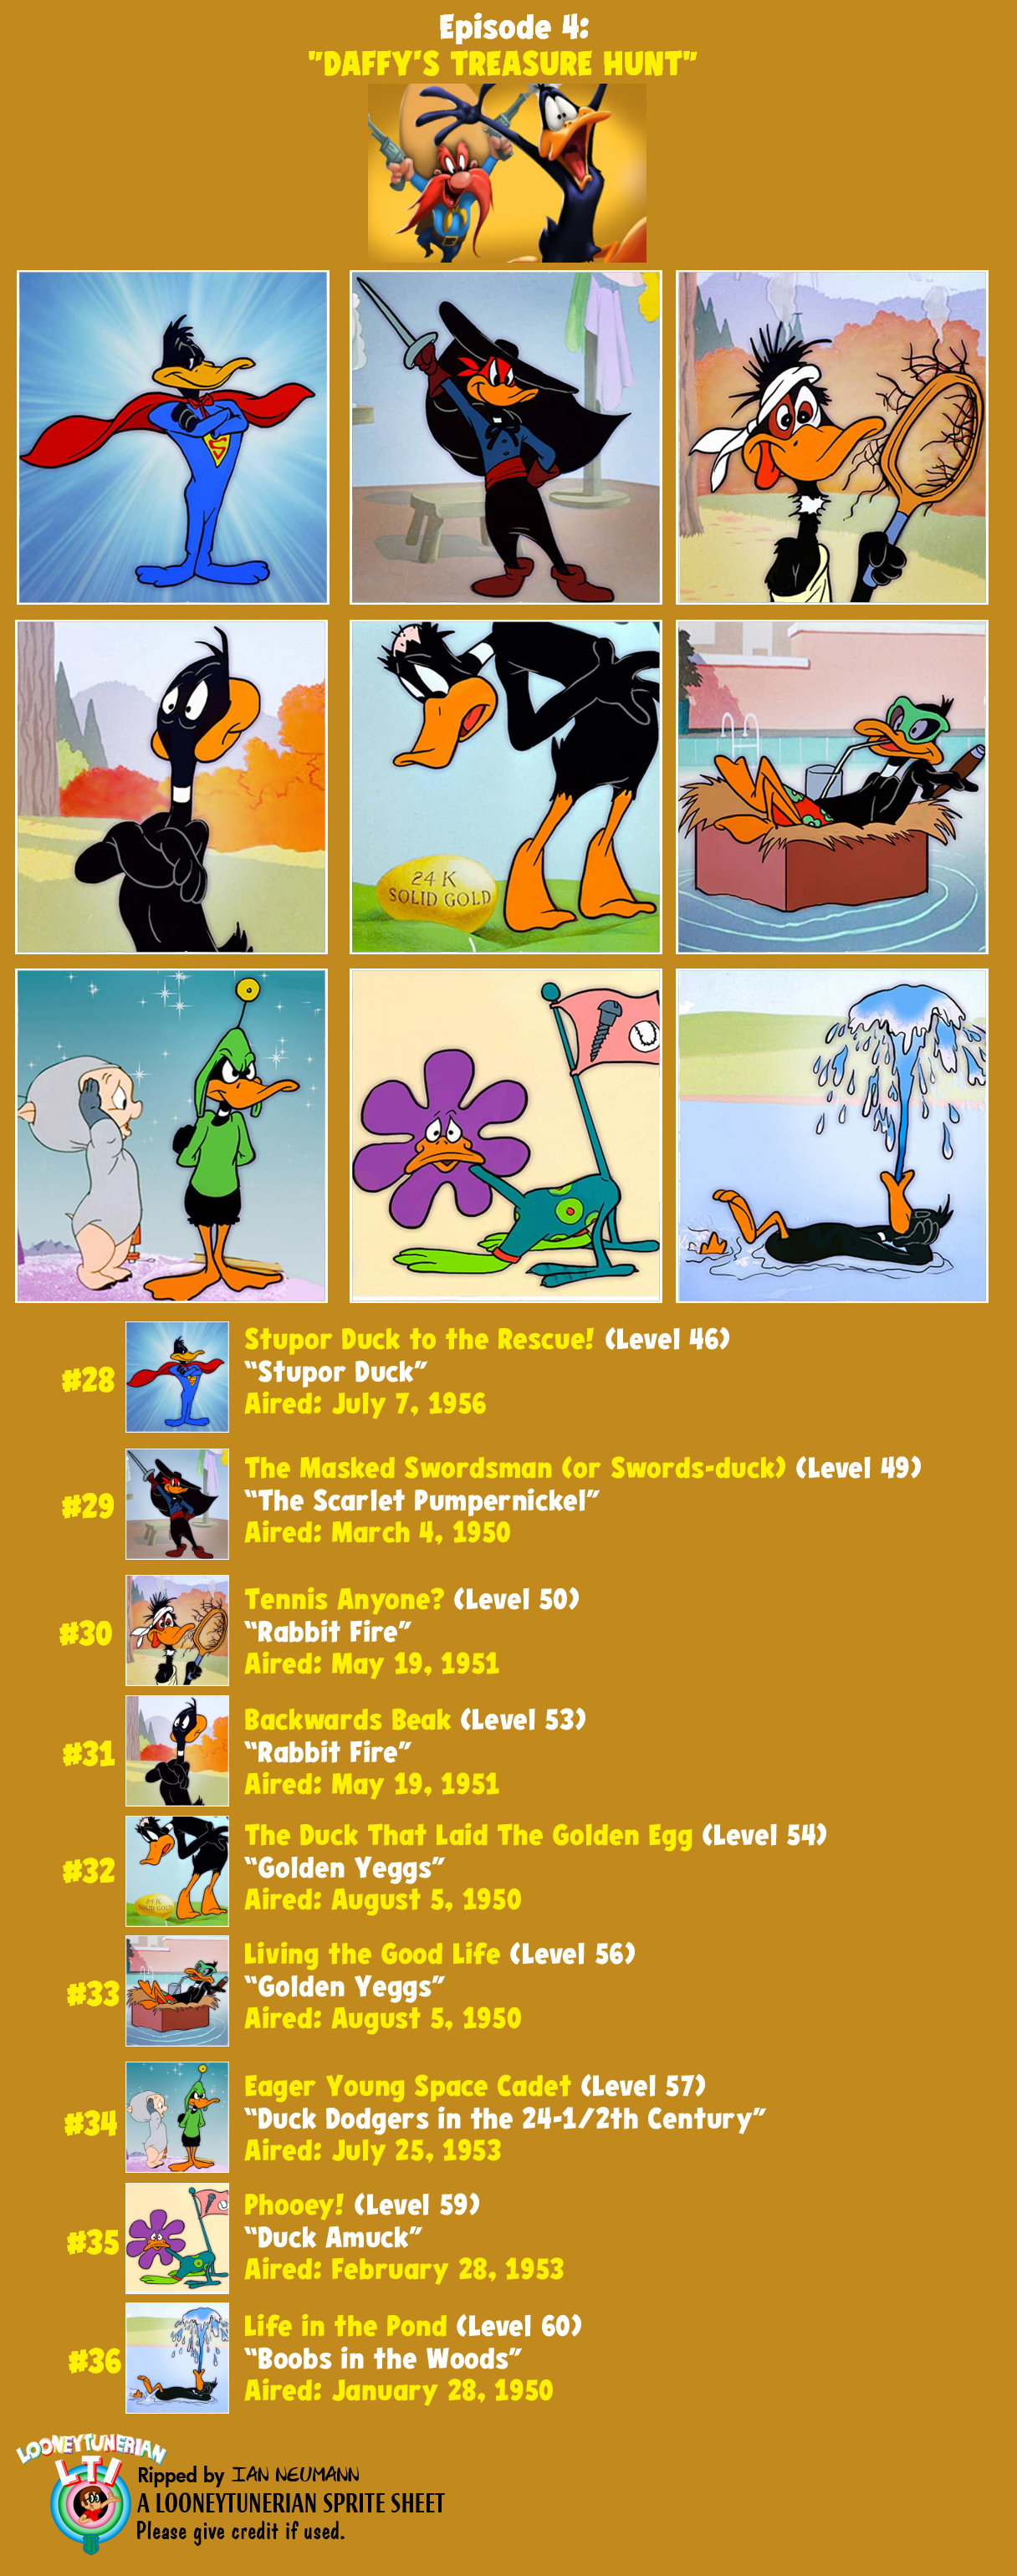 Looney Tunes Dash! - Episode 04: "Daffy's Treasure Hunt"